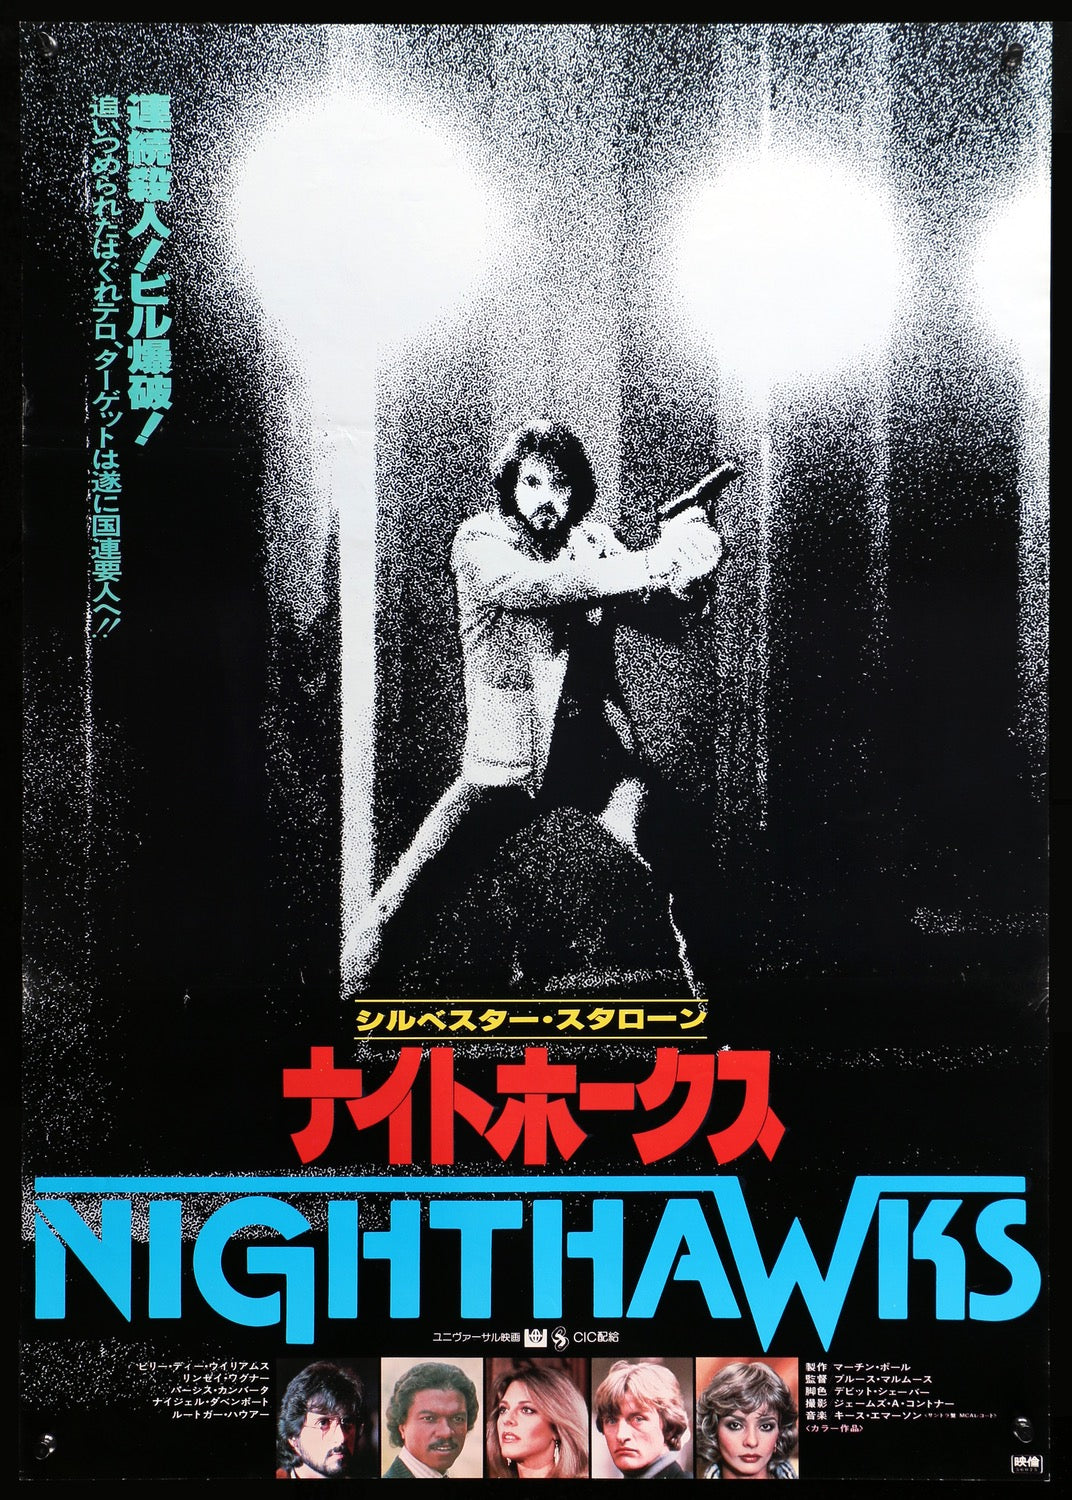 Nighthawks (1981) original movie poster for sale at Original Film Art